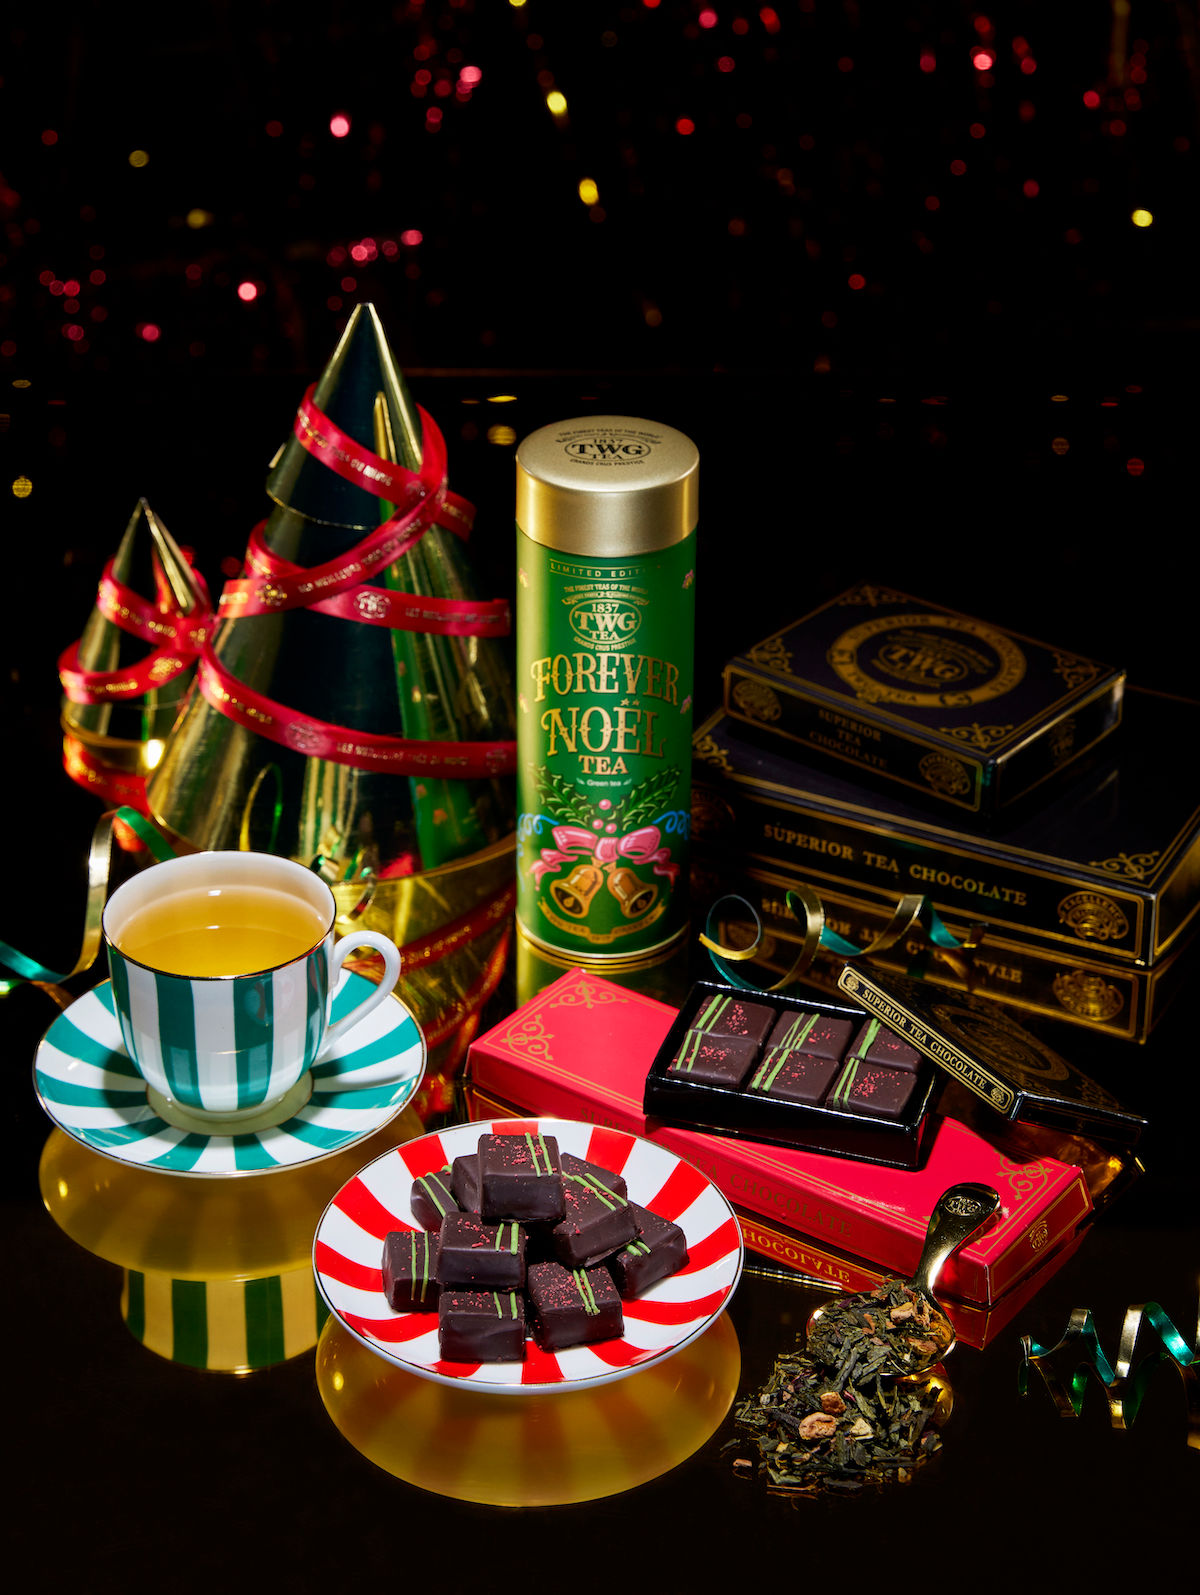 Celebrate Christmas with TWG Tea